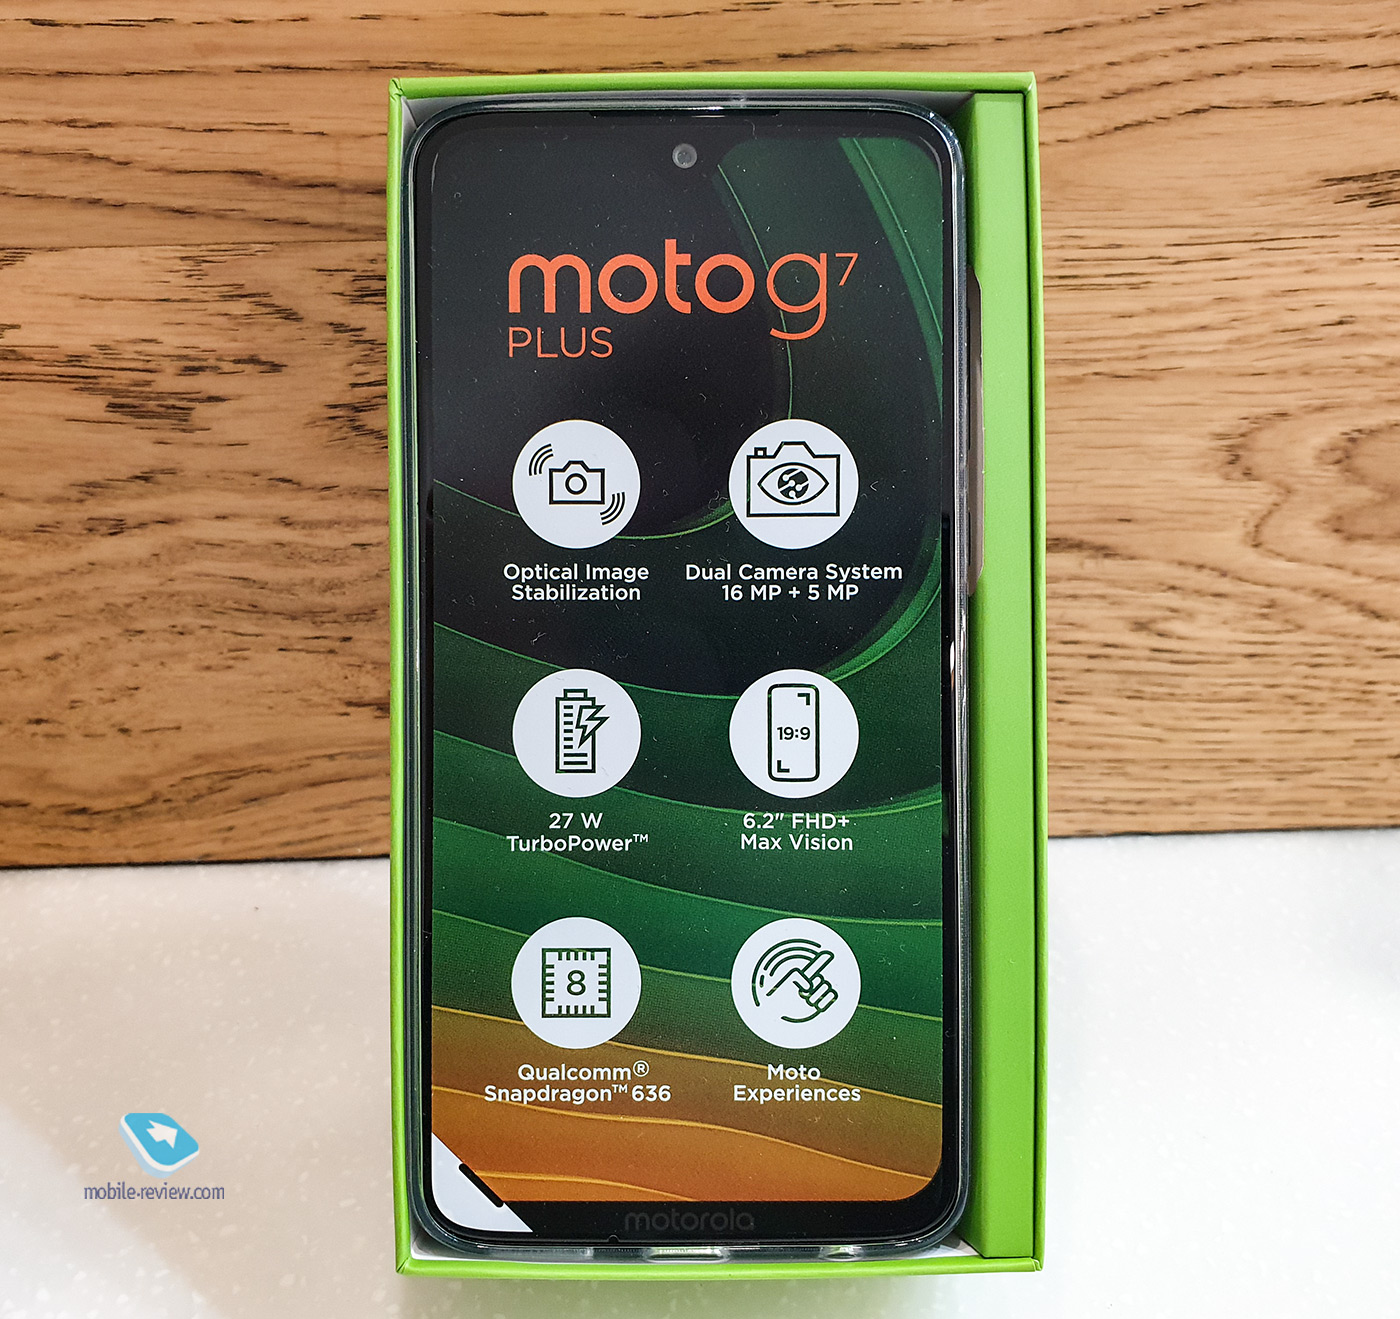  G-: Motorola G7 Plus 